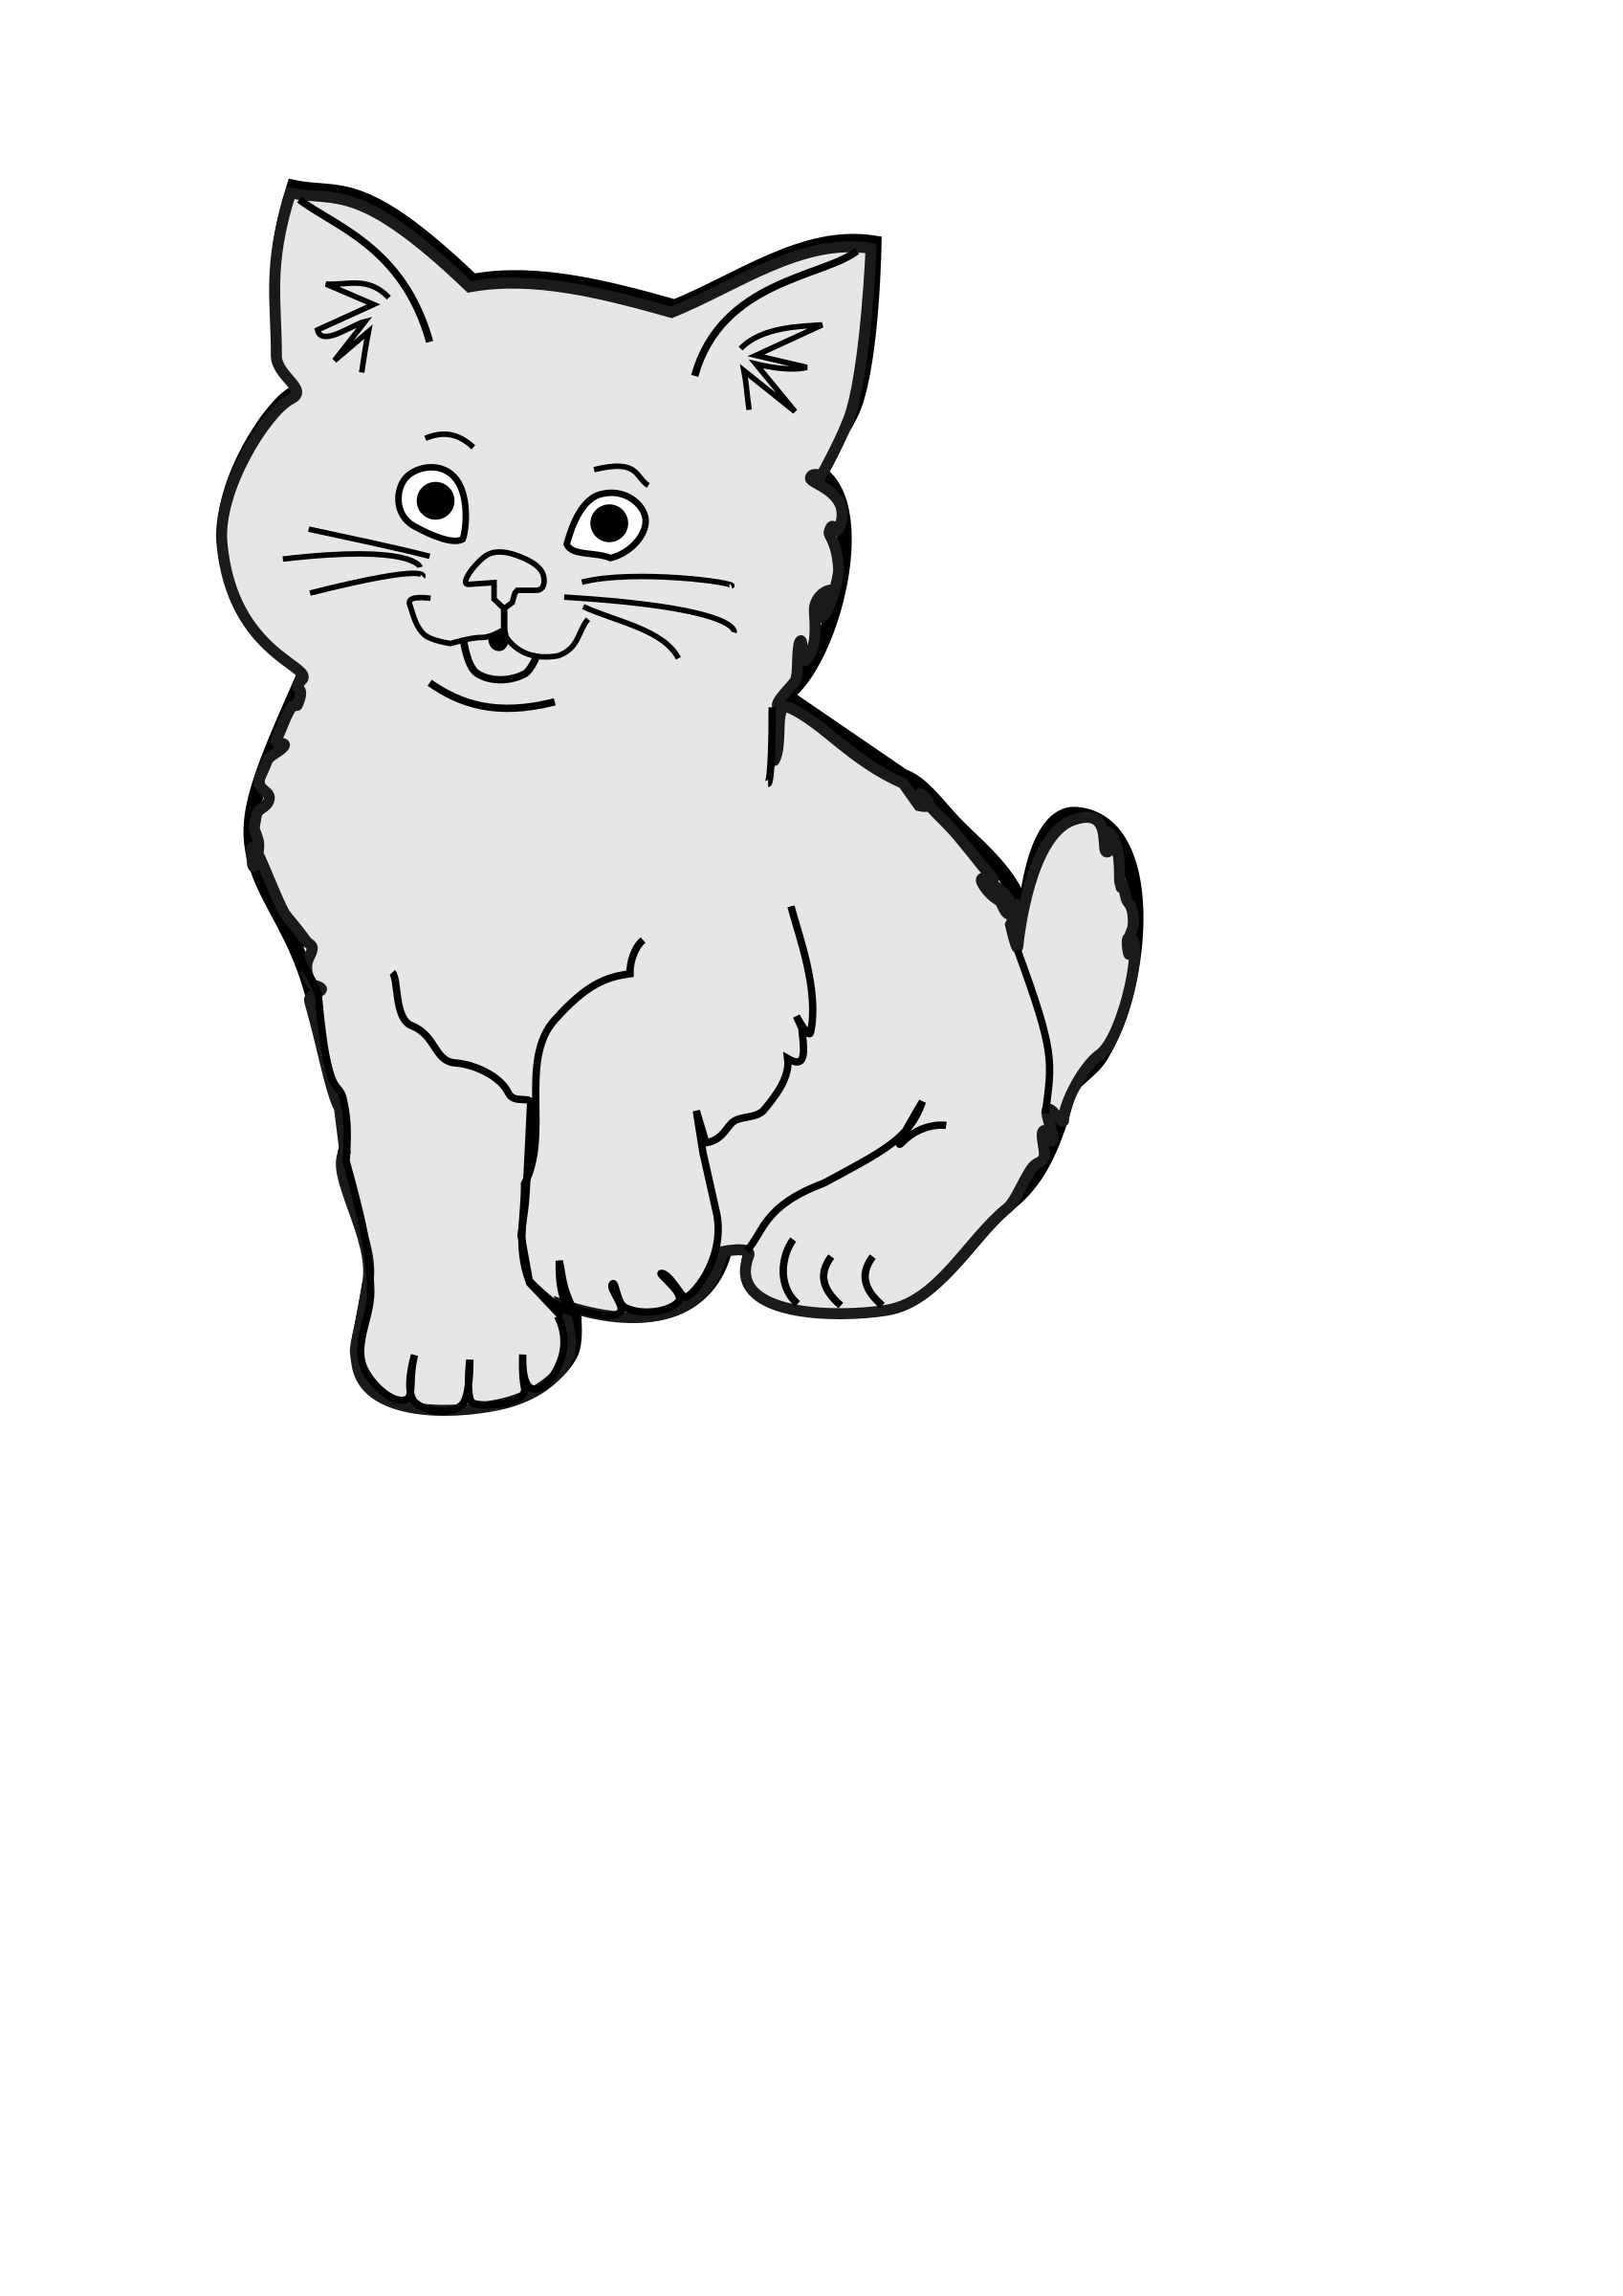 Черно белые картинки котят. Котенок рисунок. Котики картинки для печати. Кошка рисунок для детей. Трафарет котика для рисования.